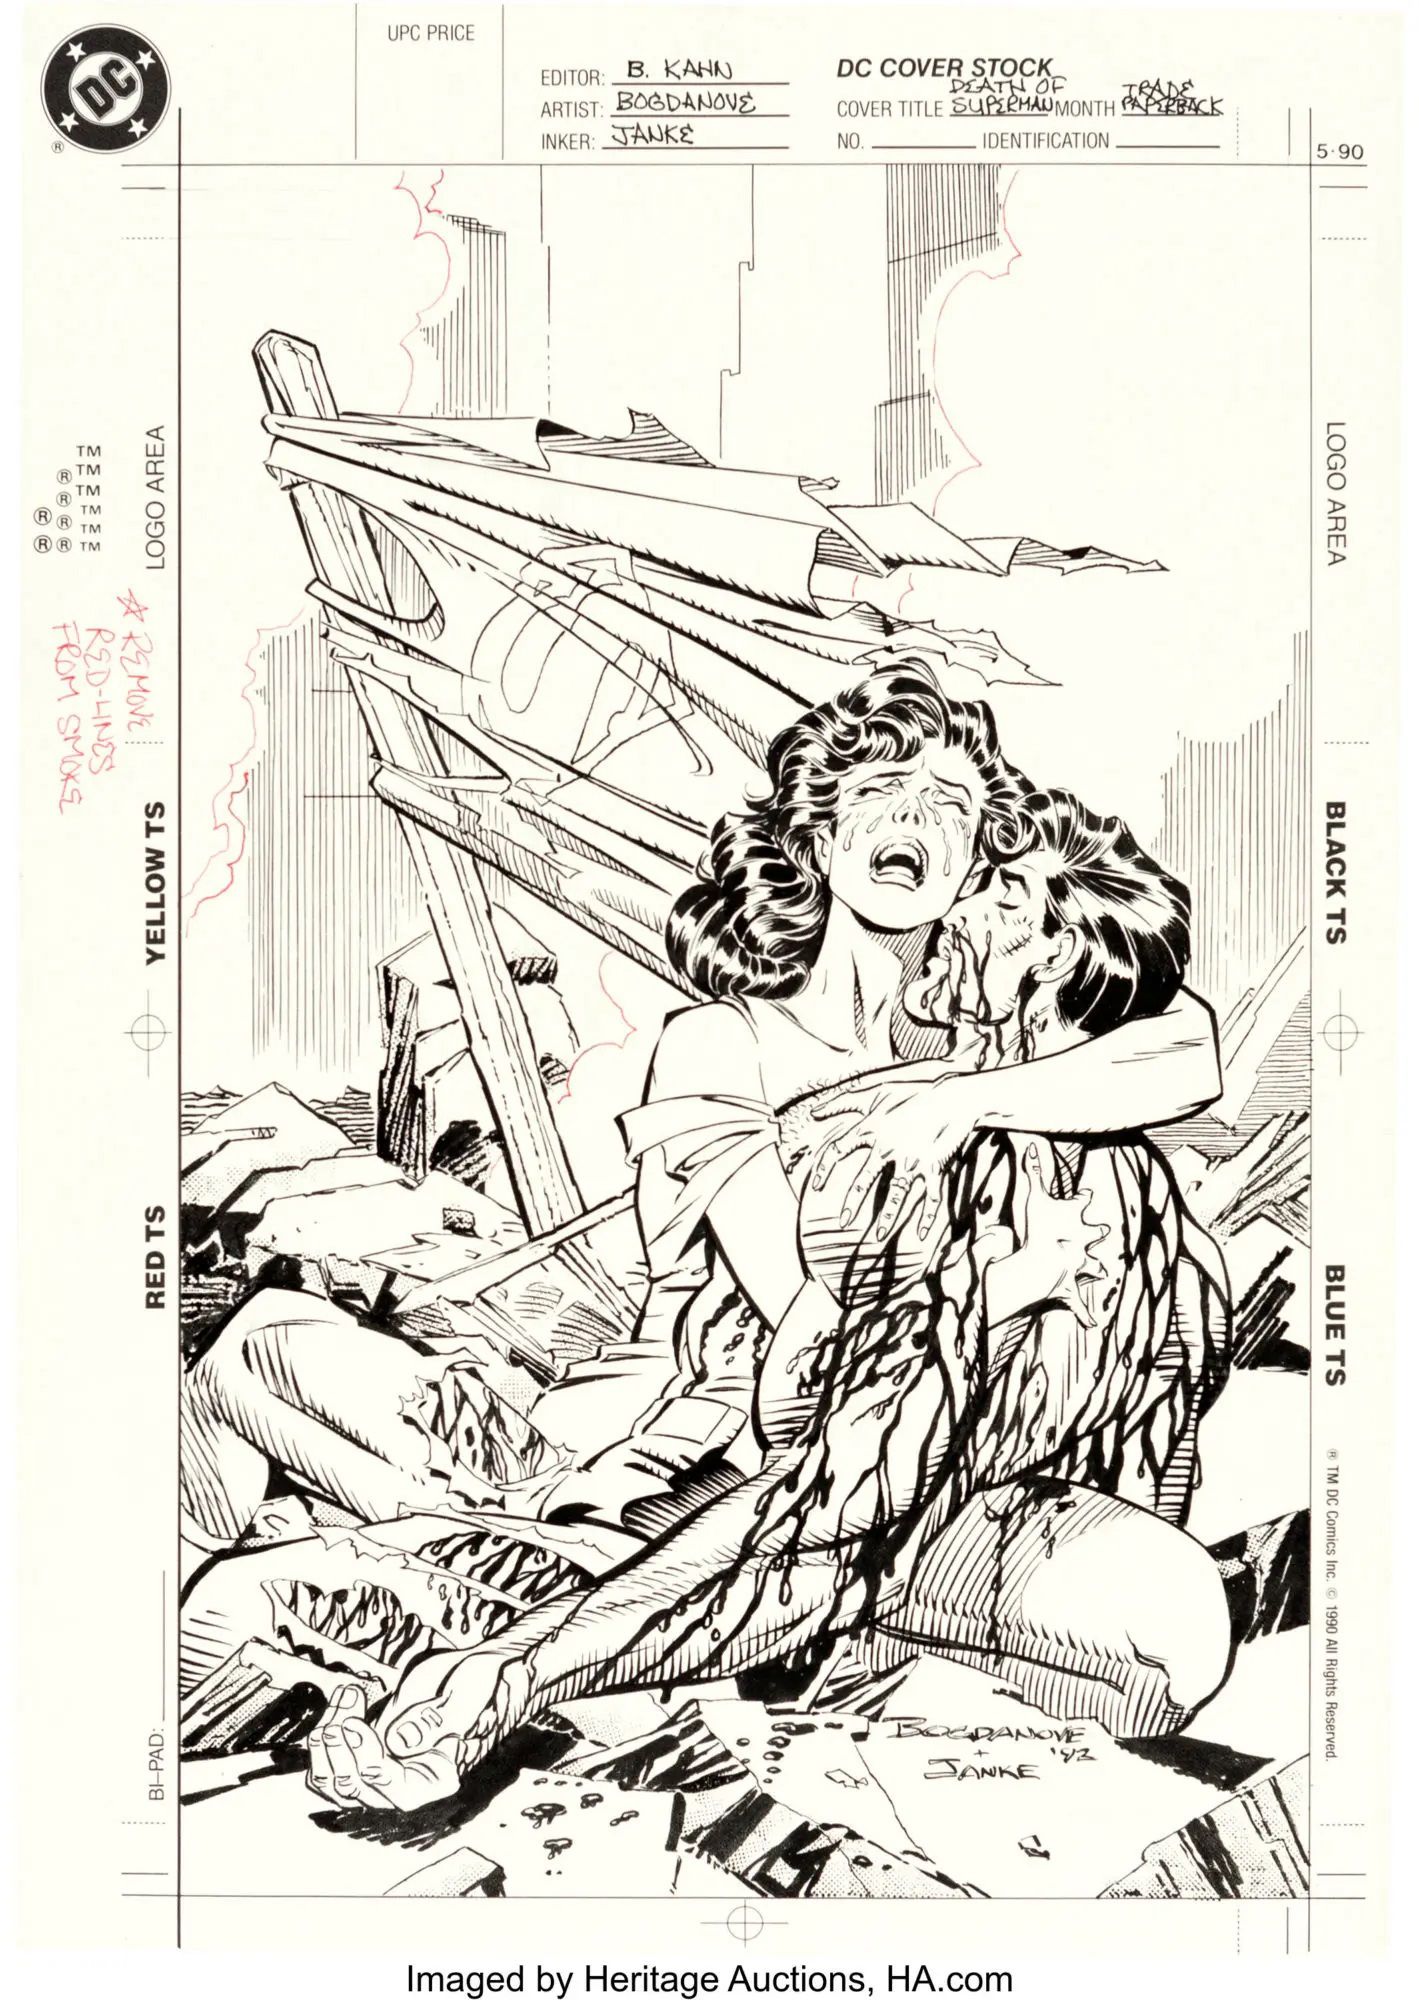 The Death of Superman Trade Paperback Original Cover Art